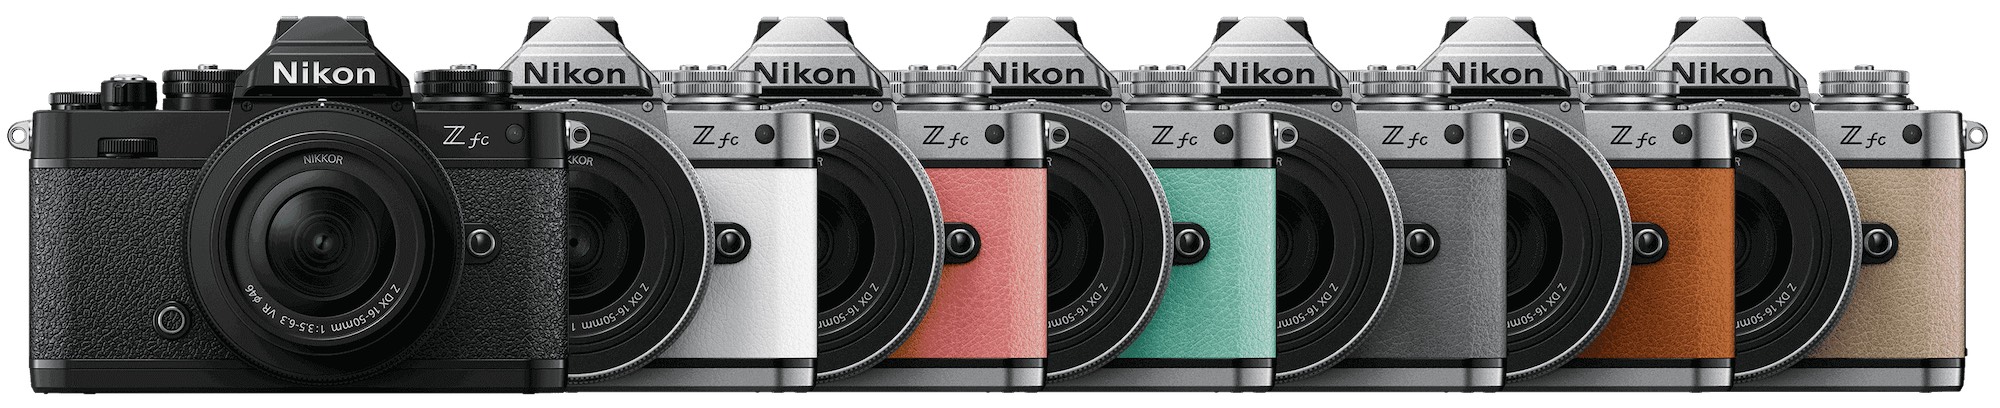 Nikon Nikkor Z 40mm f/2 lens comparisons - Nikon Rumors